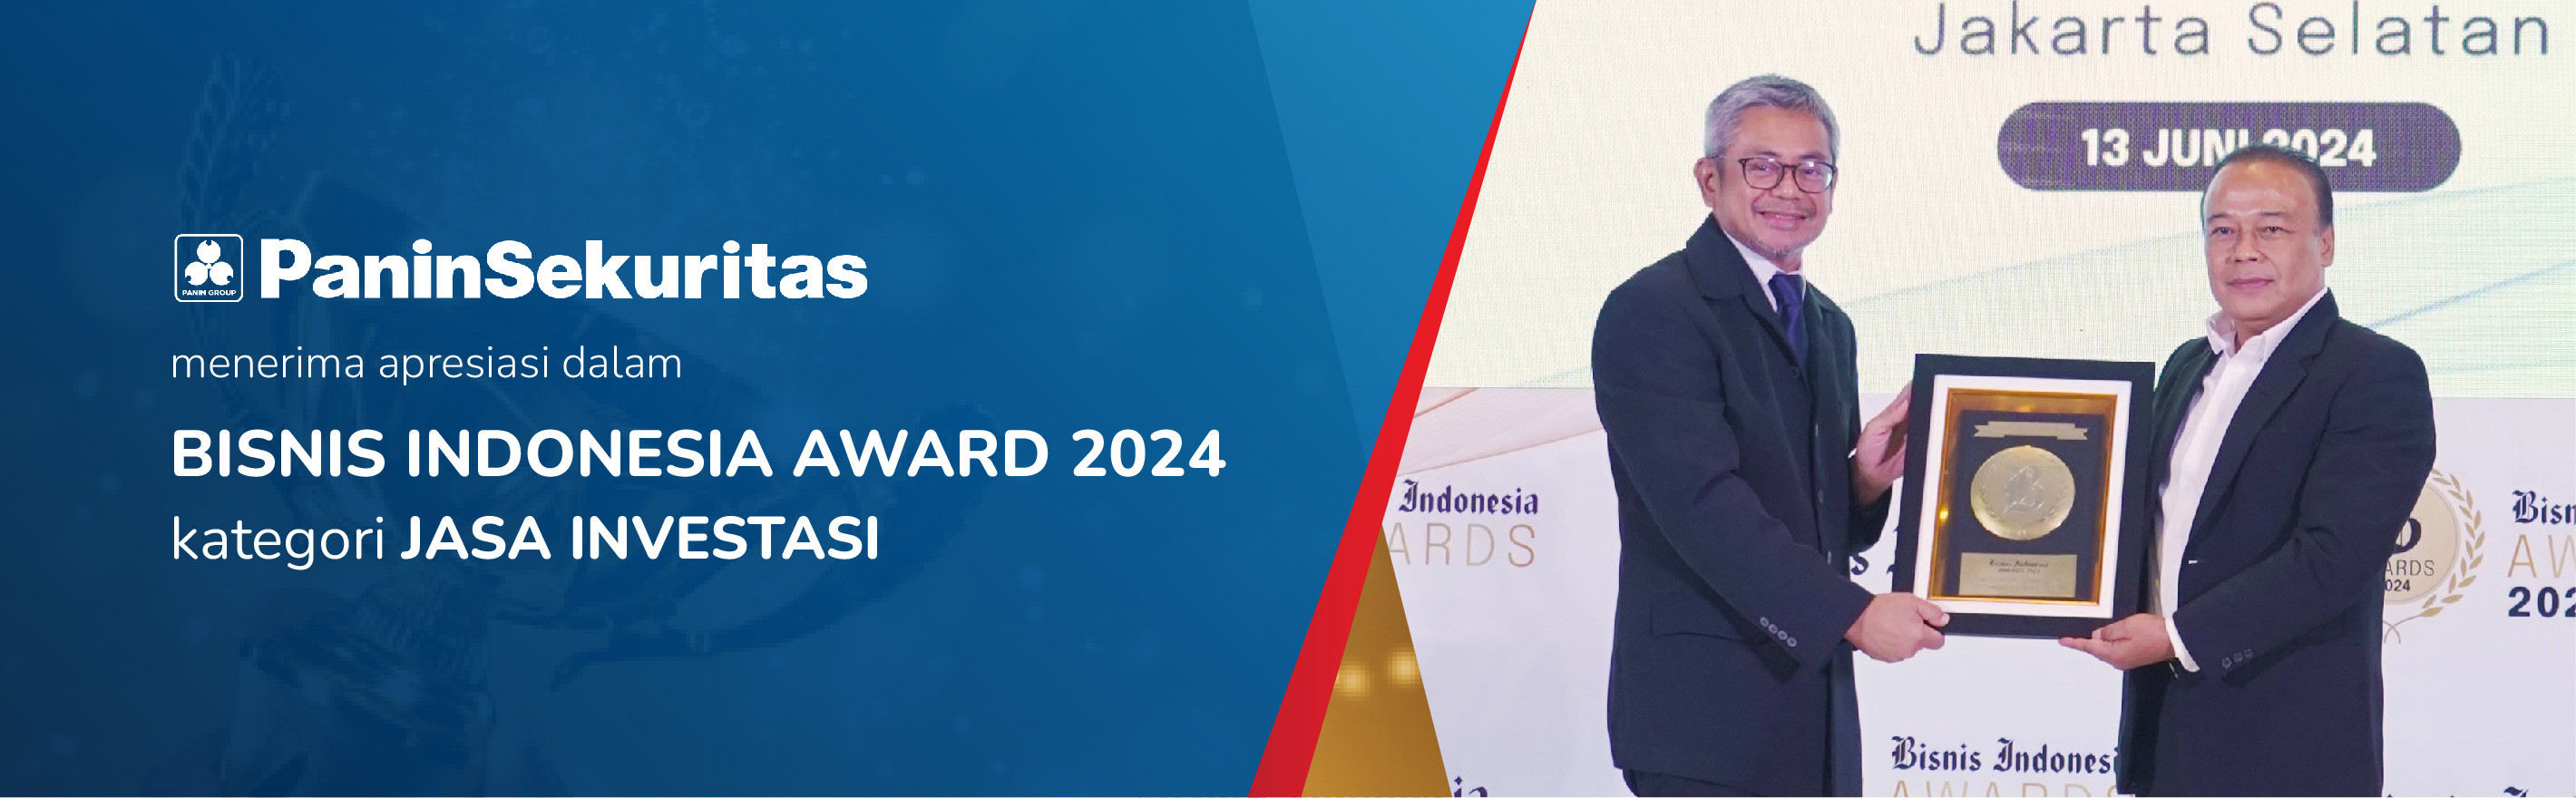 Bisnis Indonesia Award 2024